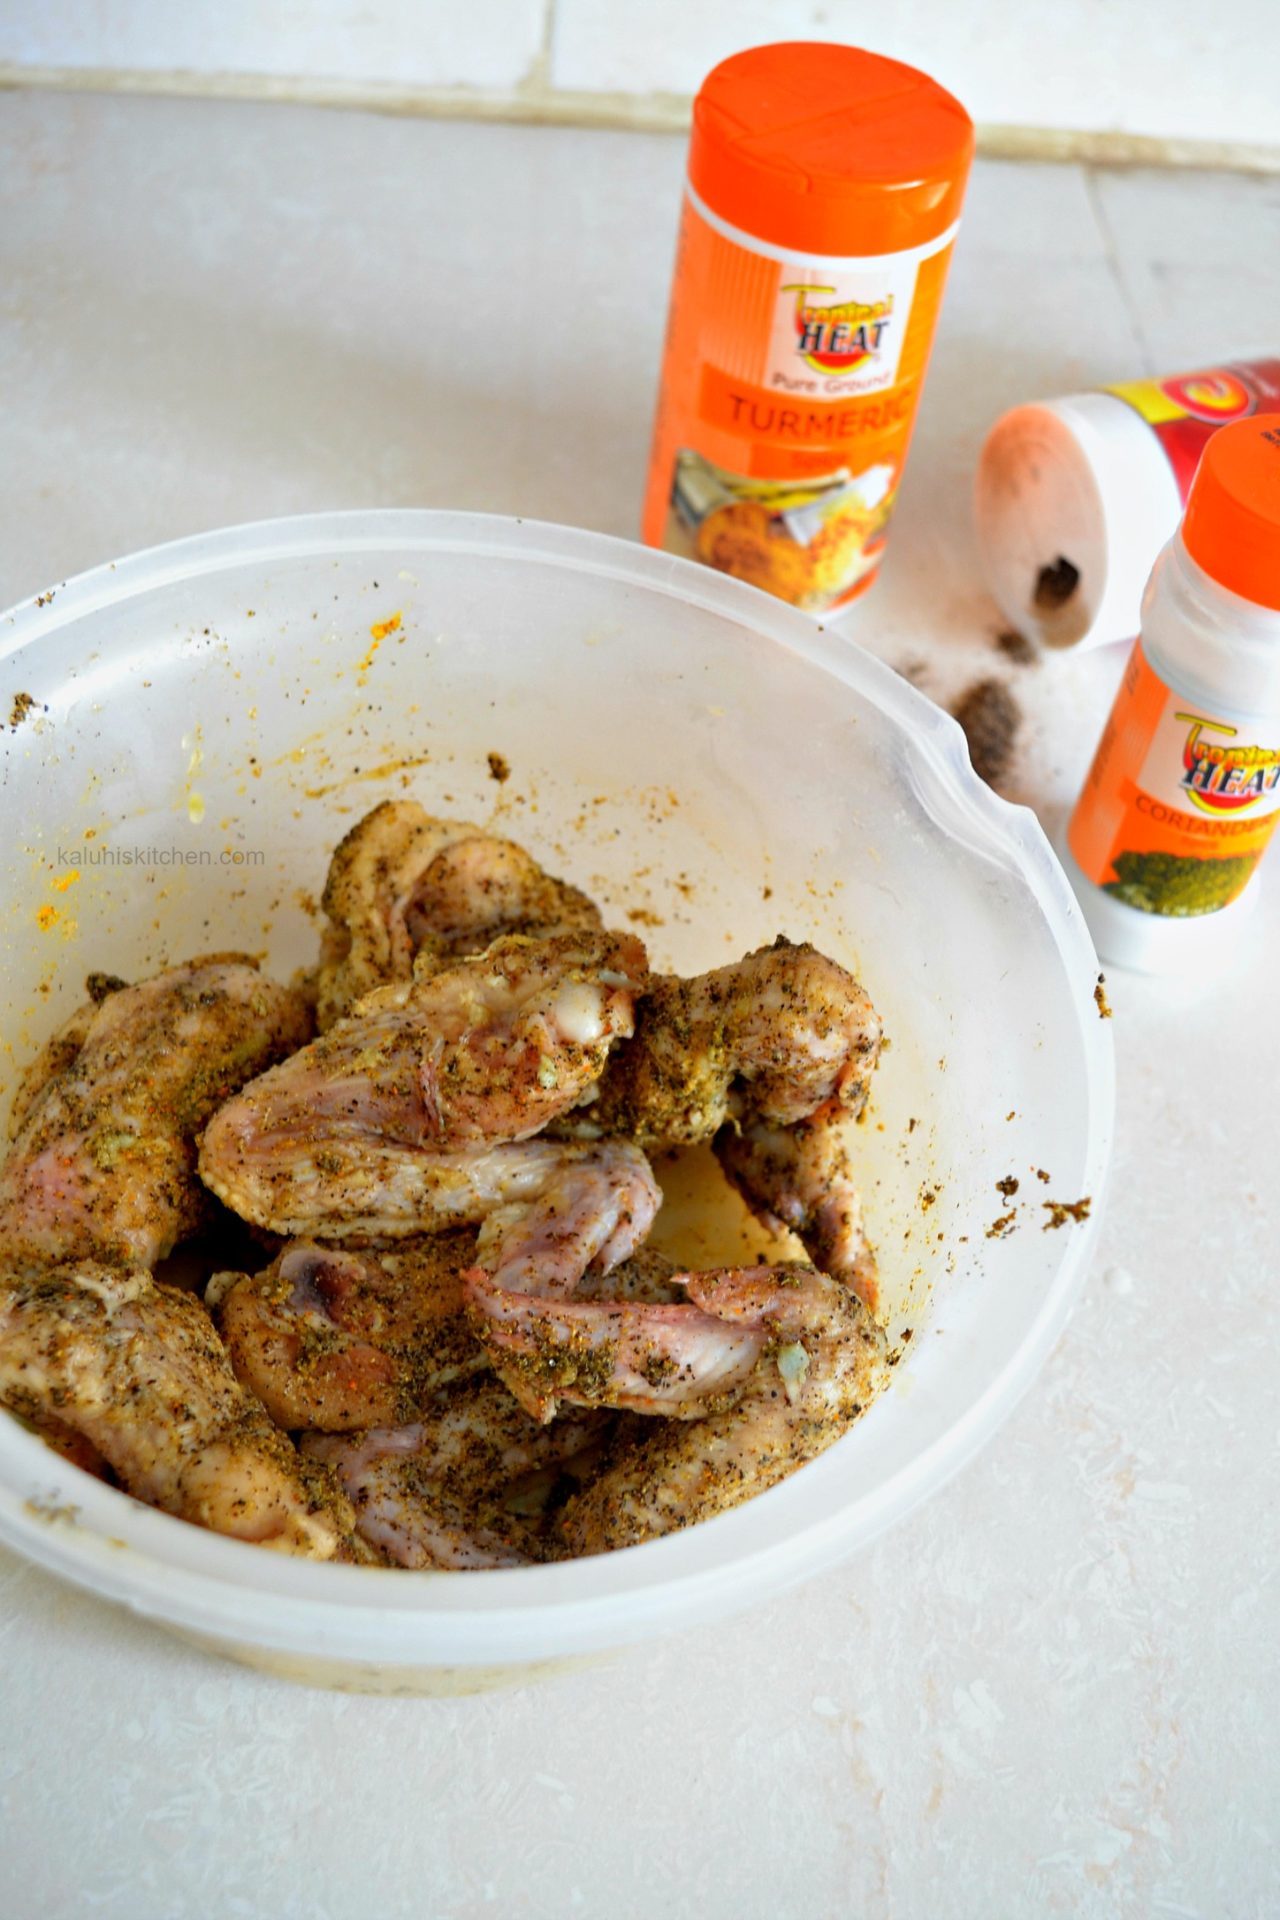 seasoning chicken with coriander powder, turmeric and black pepper for my brandy marinated chicken wings_kaluhiskitchen.com